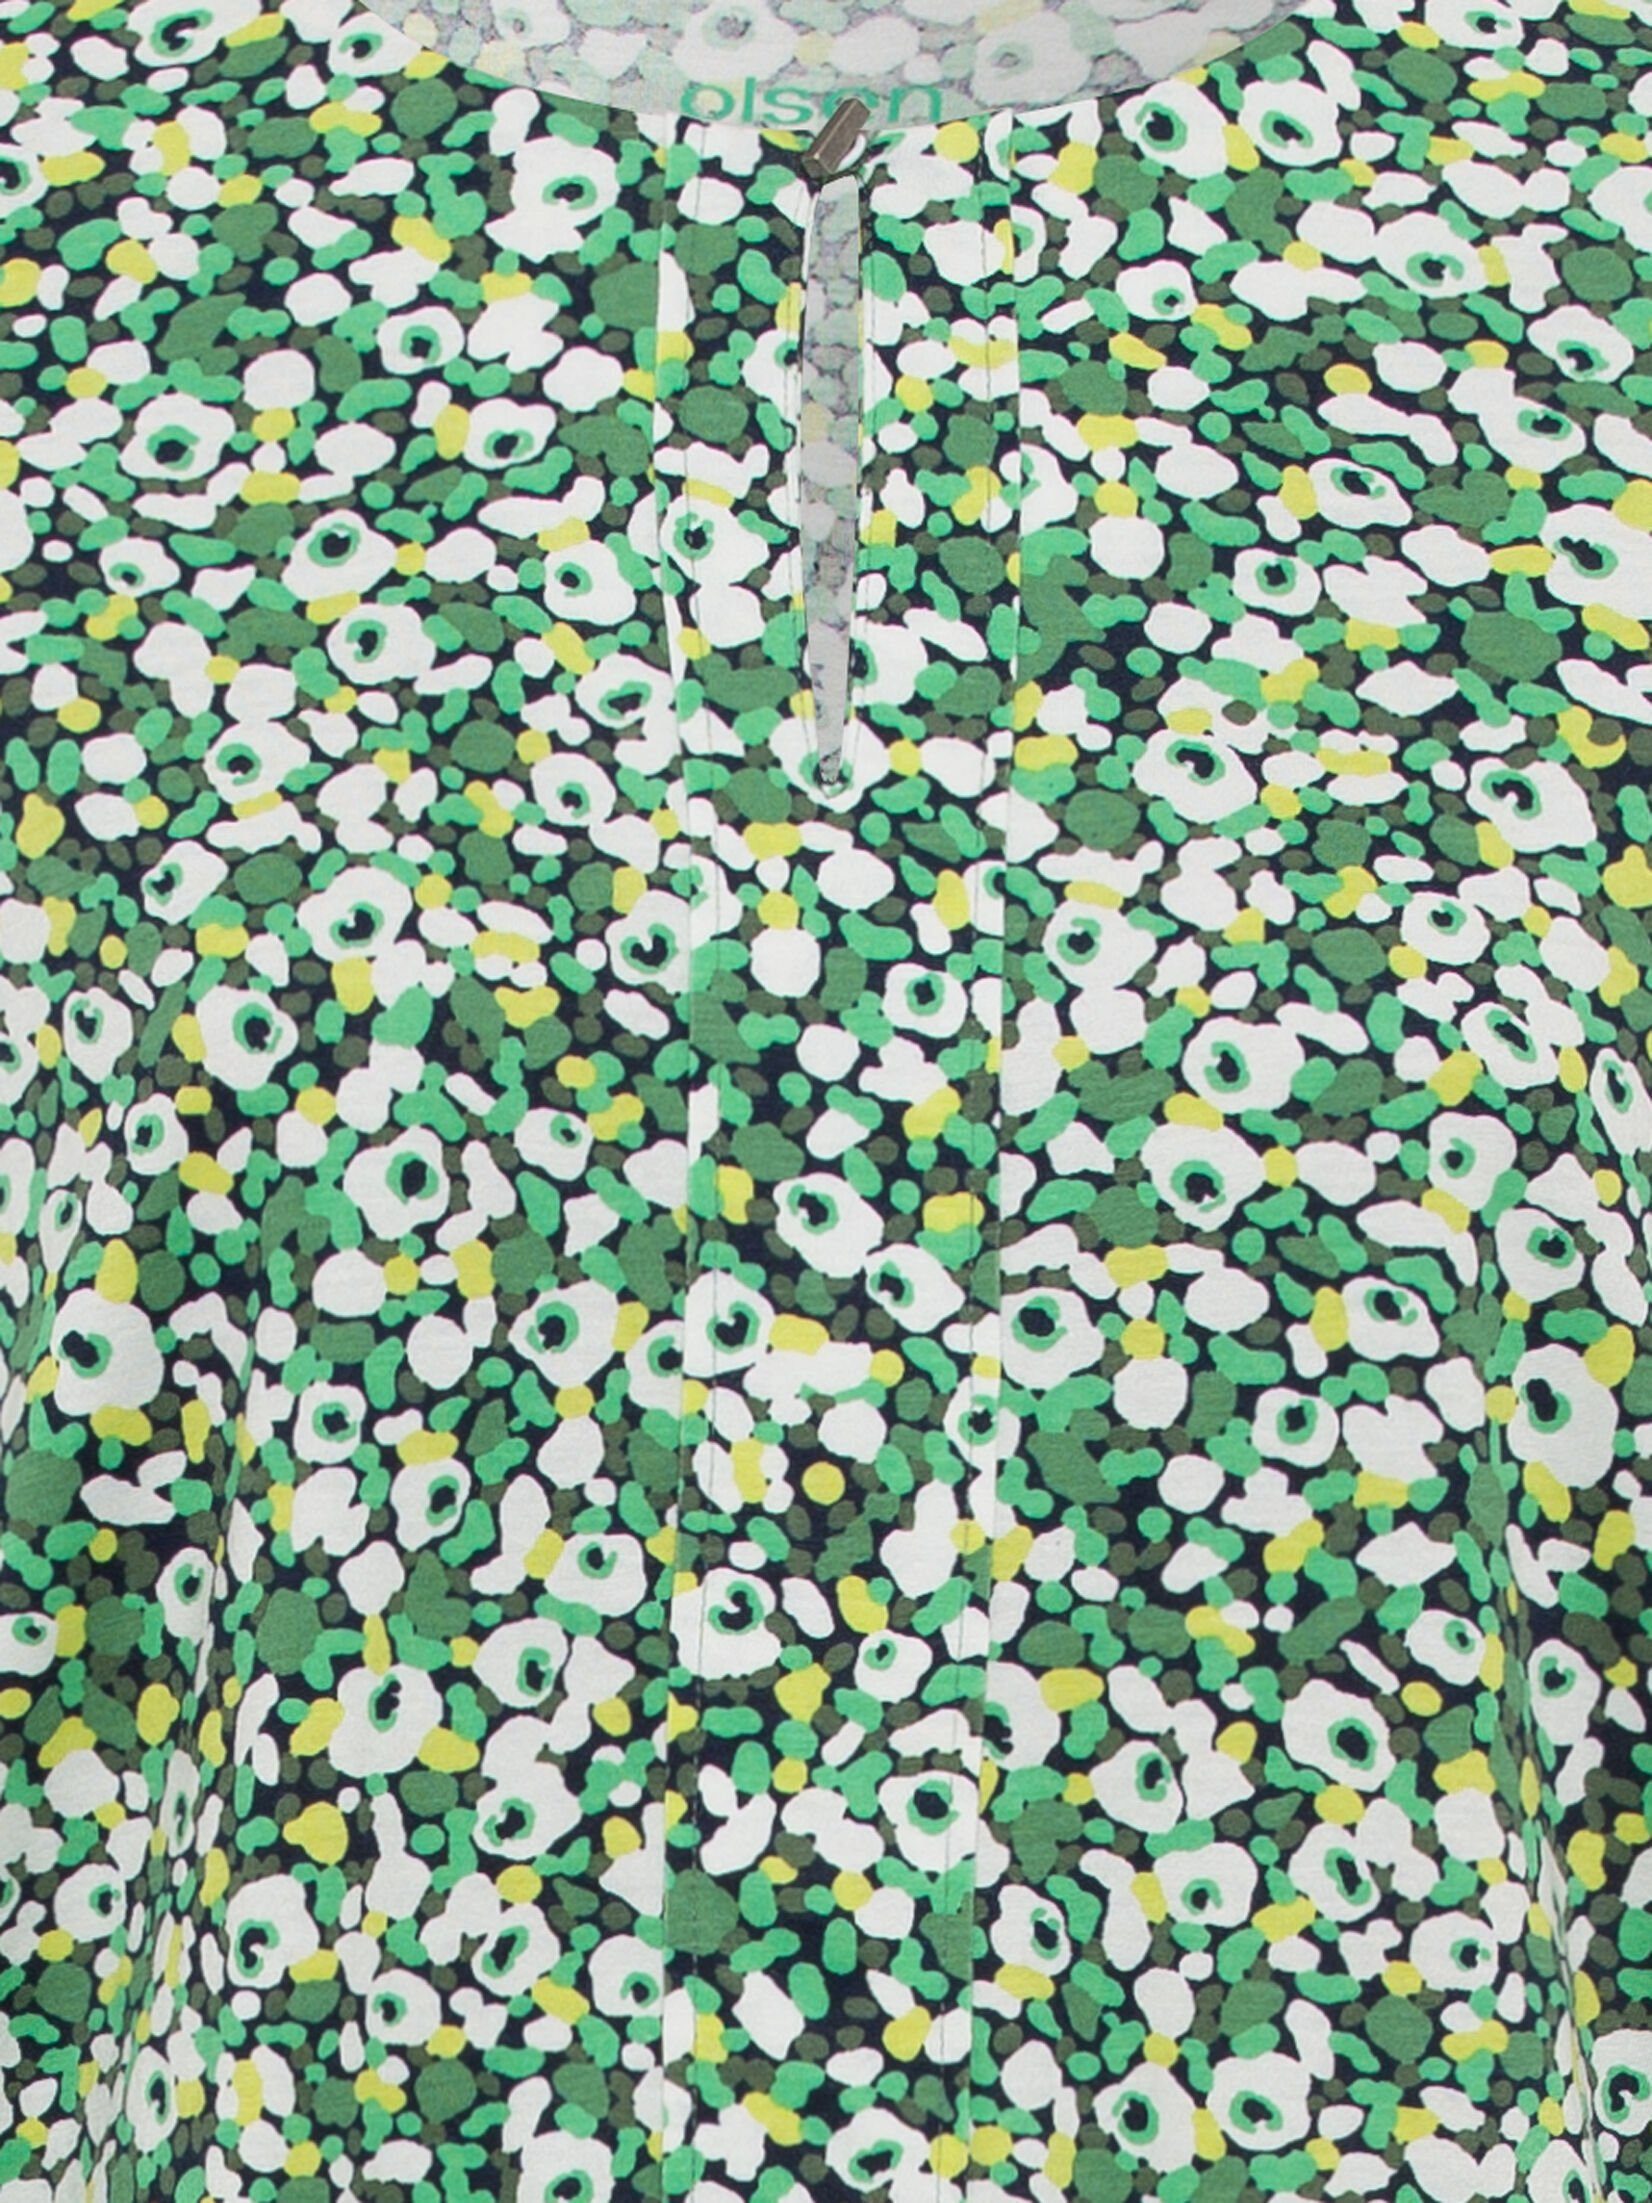 Olsen Print-Shirt mit Blumenprint